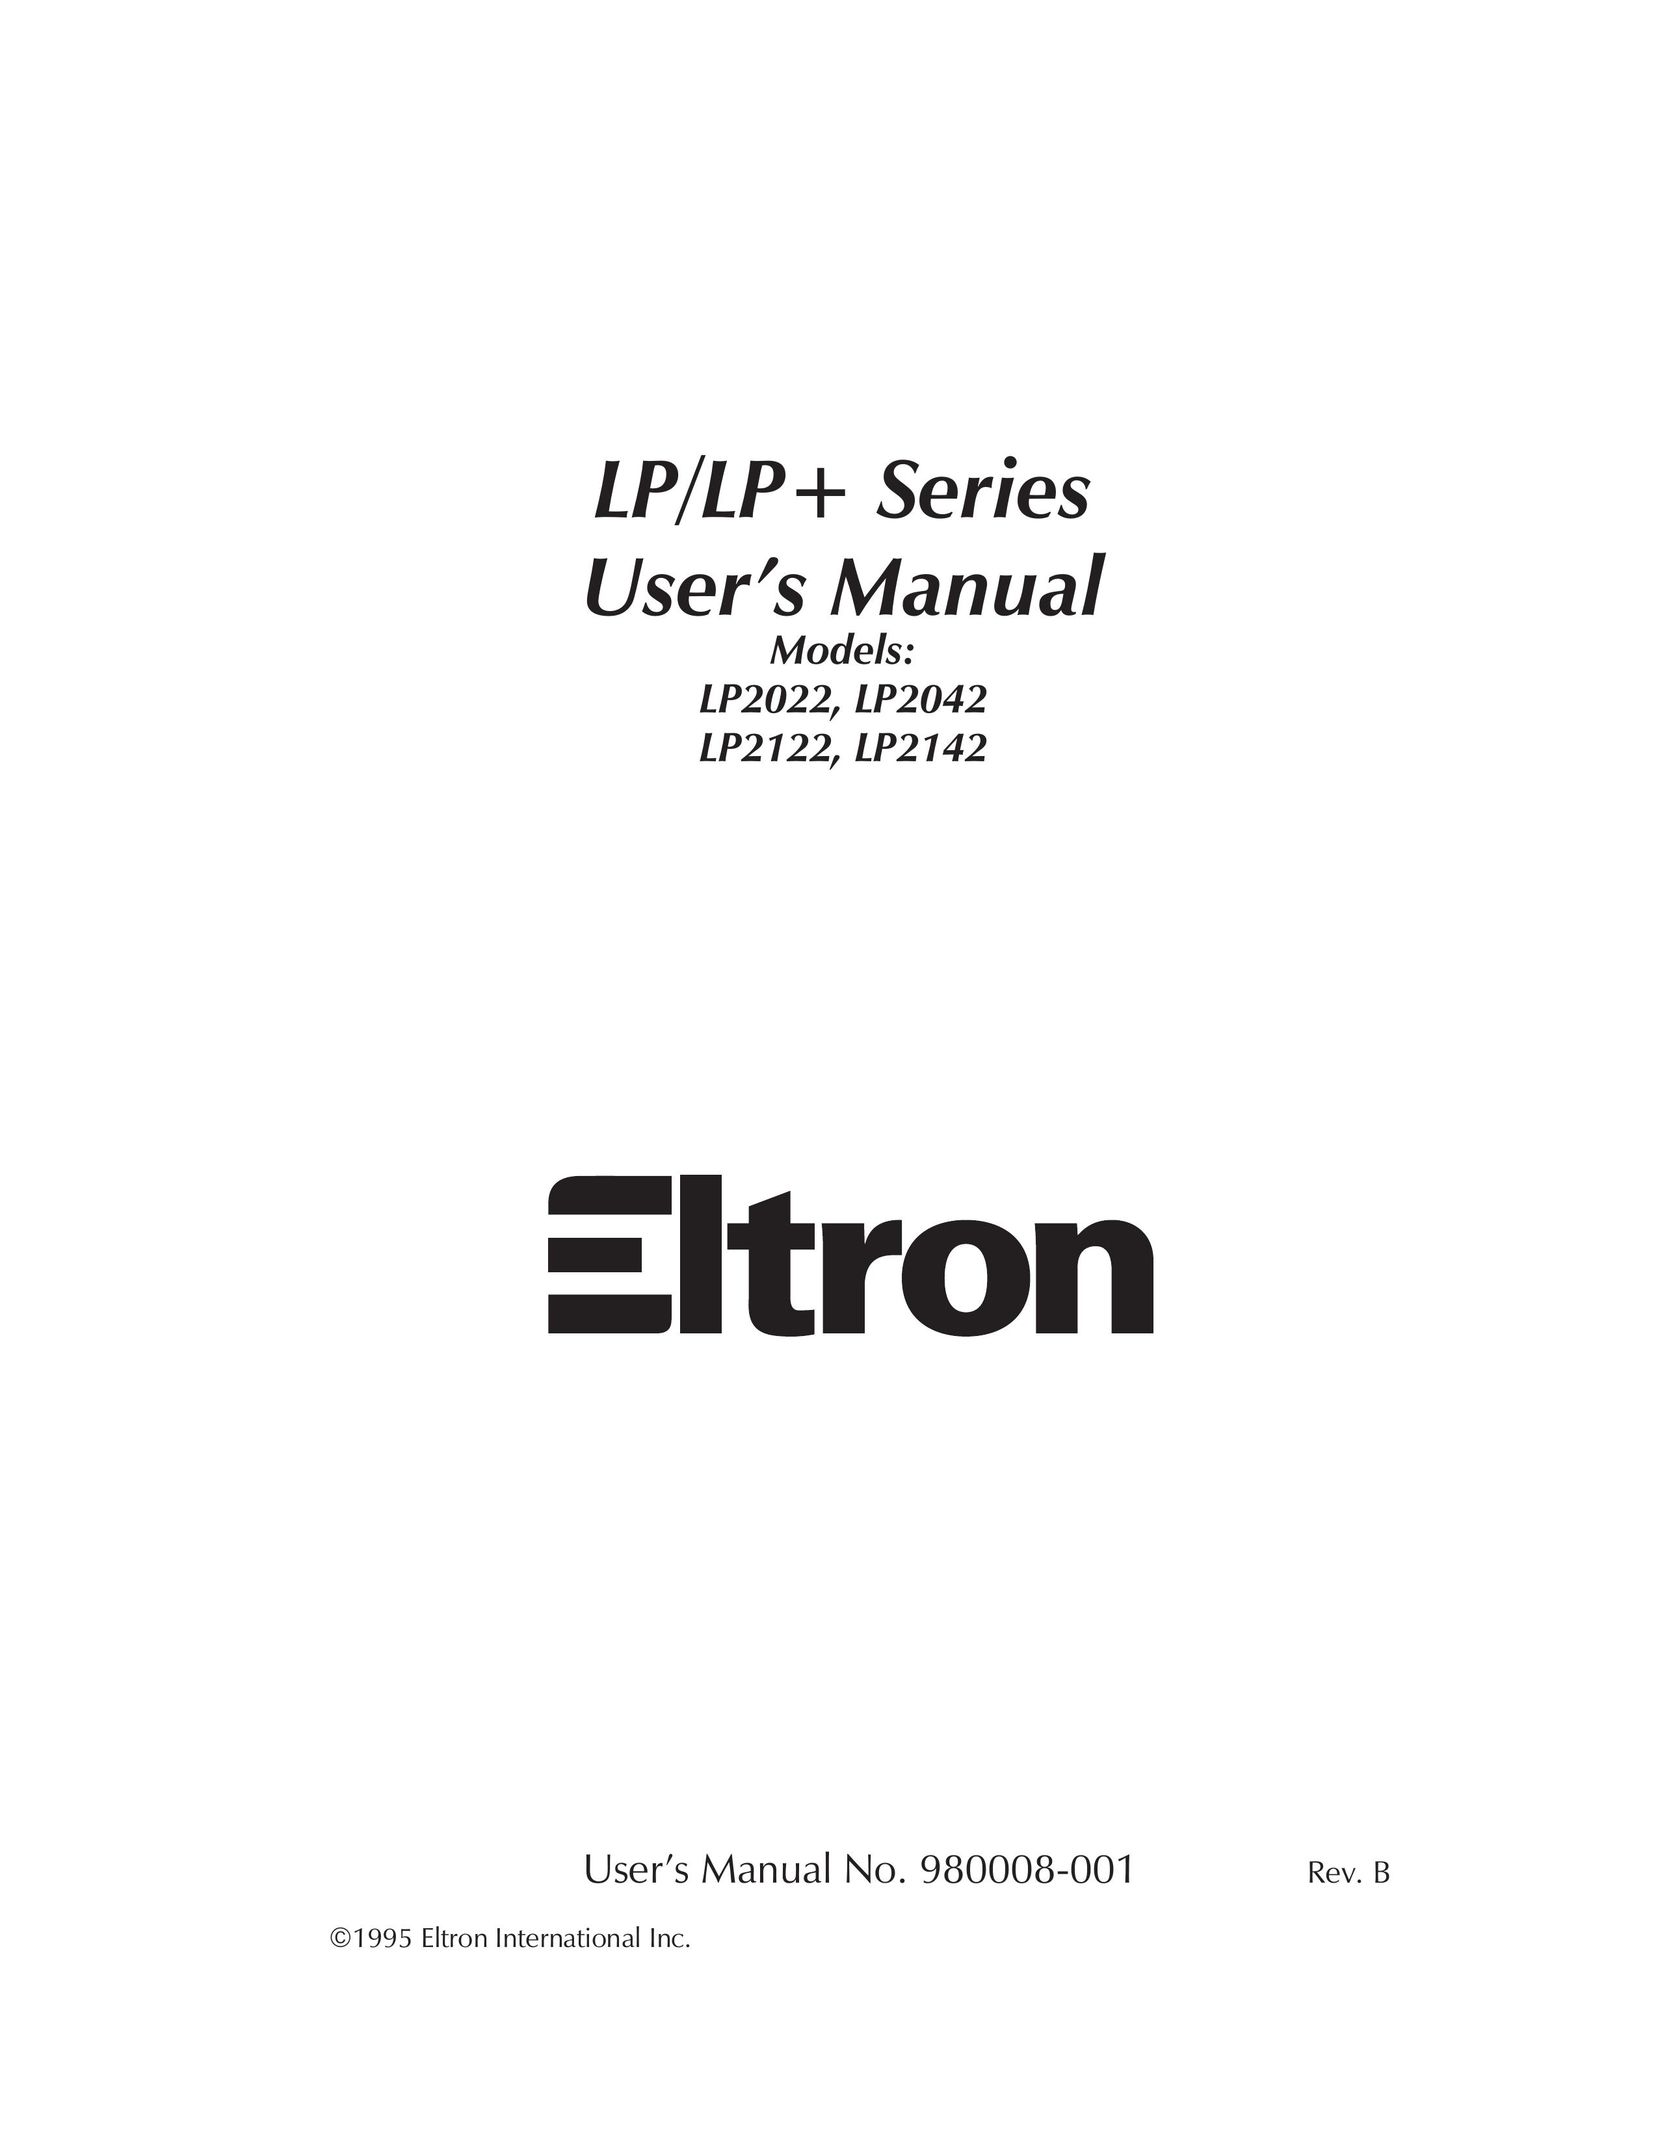 The Eltron Company LP2122 Printer User Manual